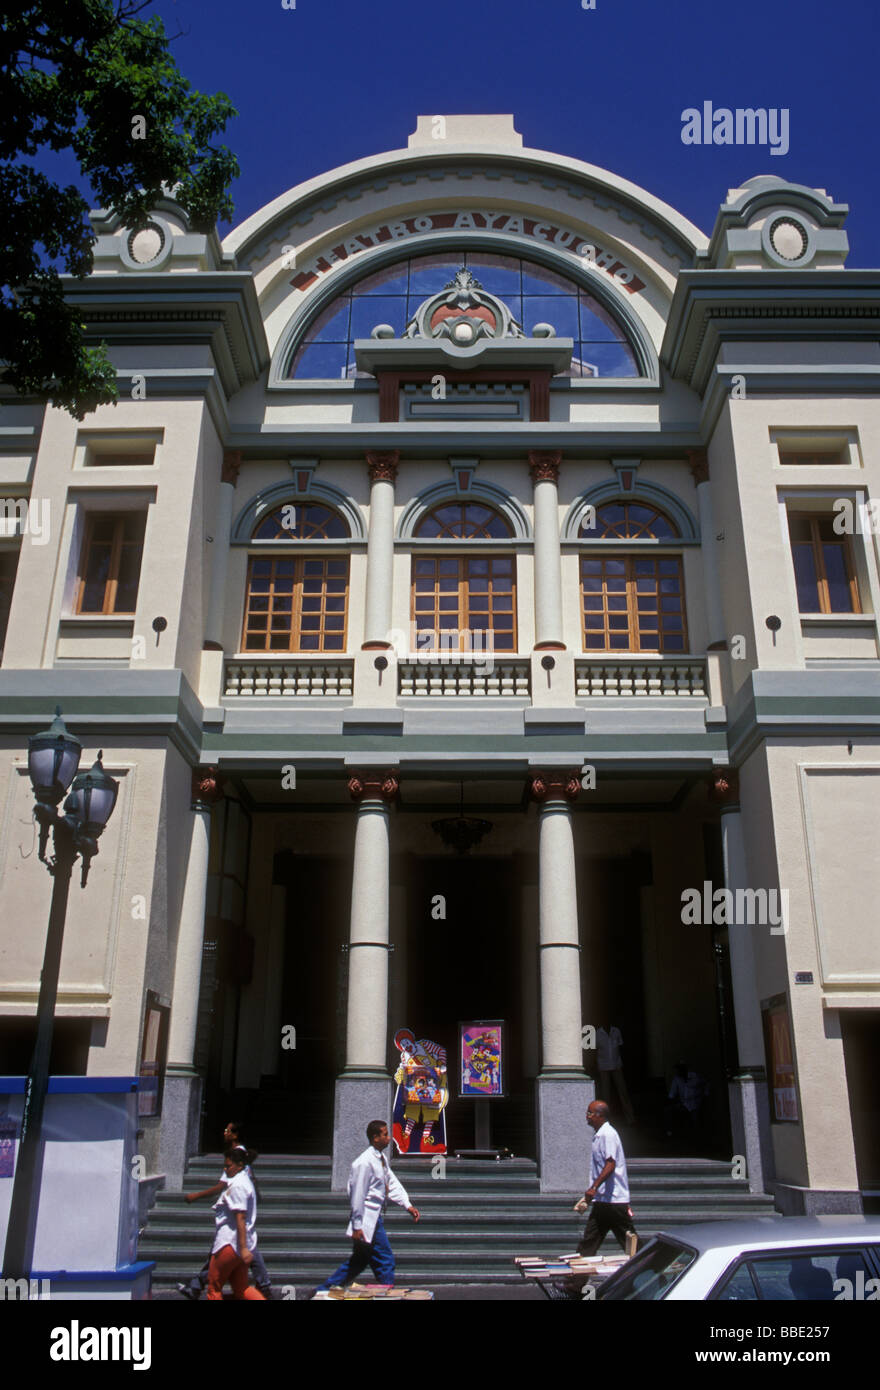 Teatro Ayacucho, Ayacucho Theater, neo-baroque architecture, city of Caracas, Capital District, Venezuela Stock Photo